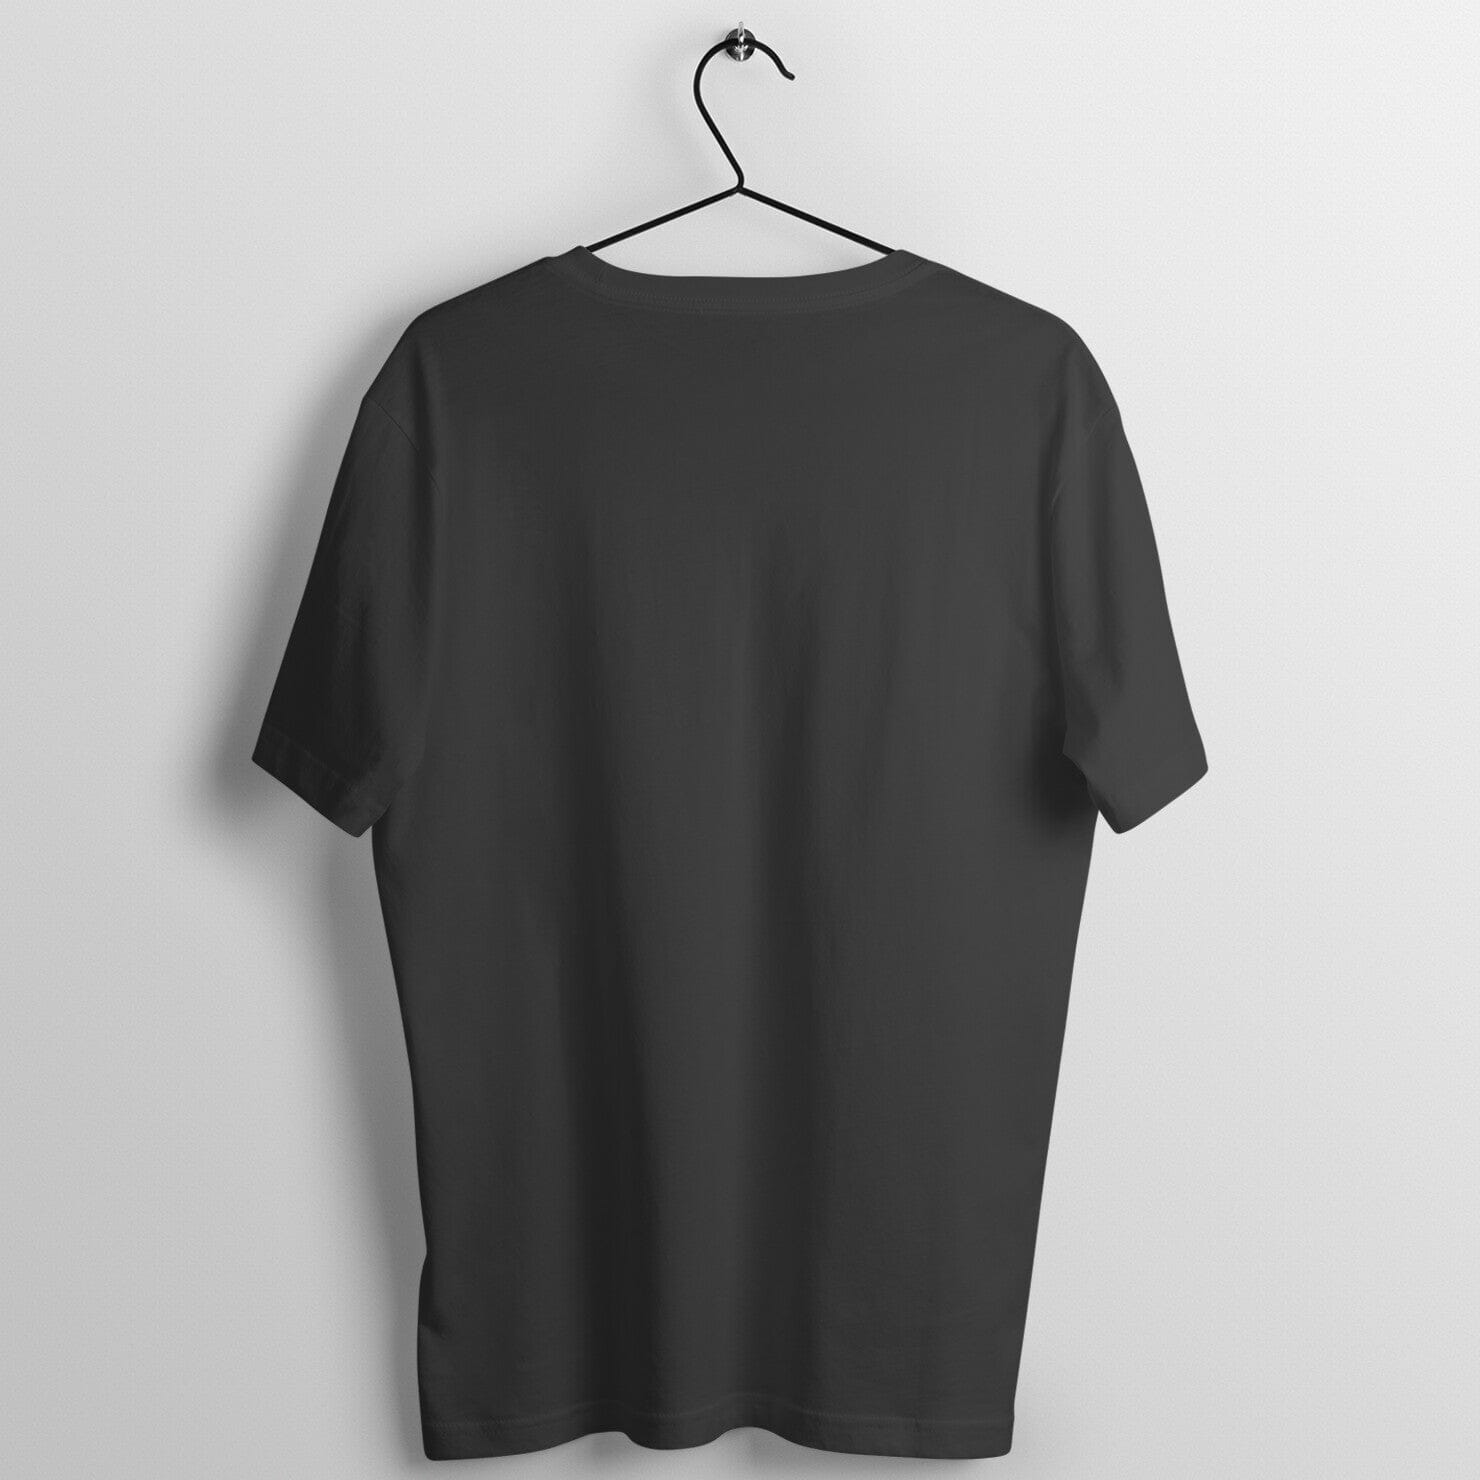 BATAO BUOY Funny Black T Shirt for Men and Women Printrove 